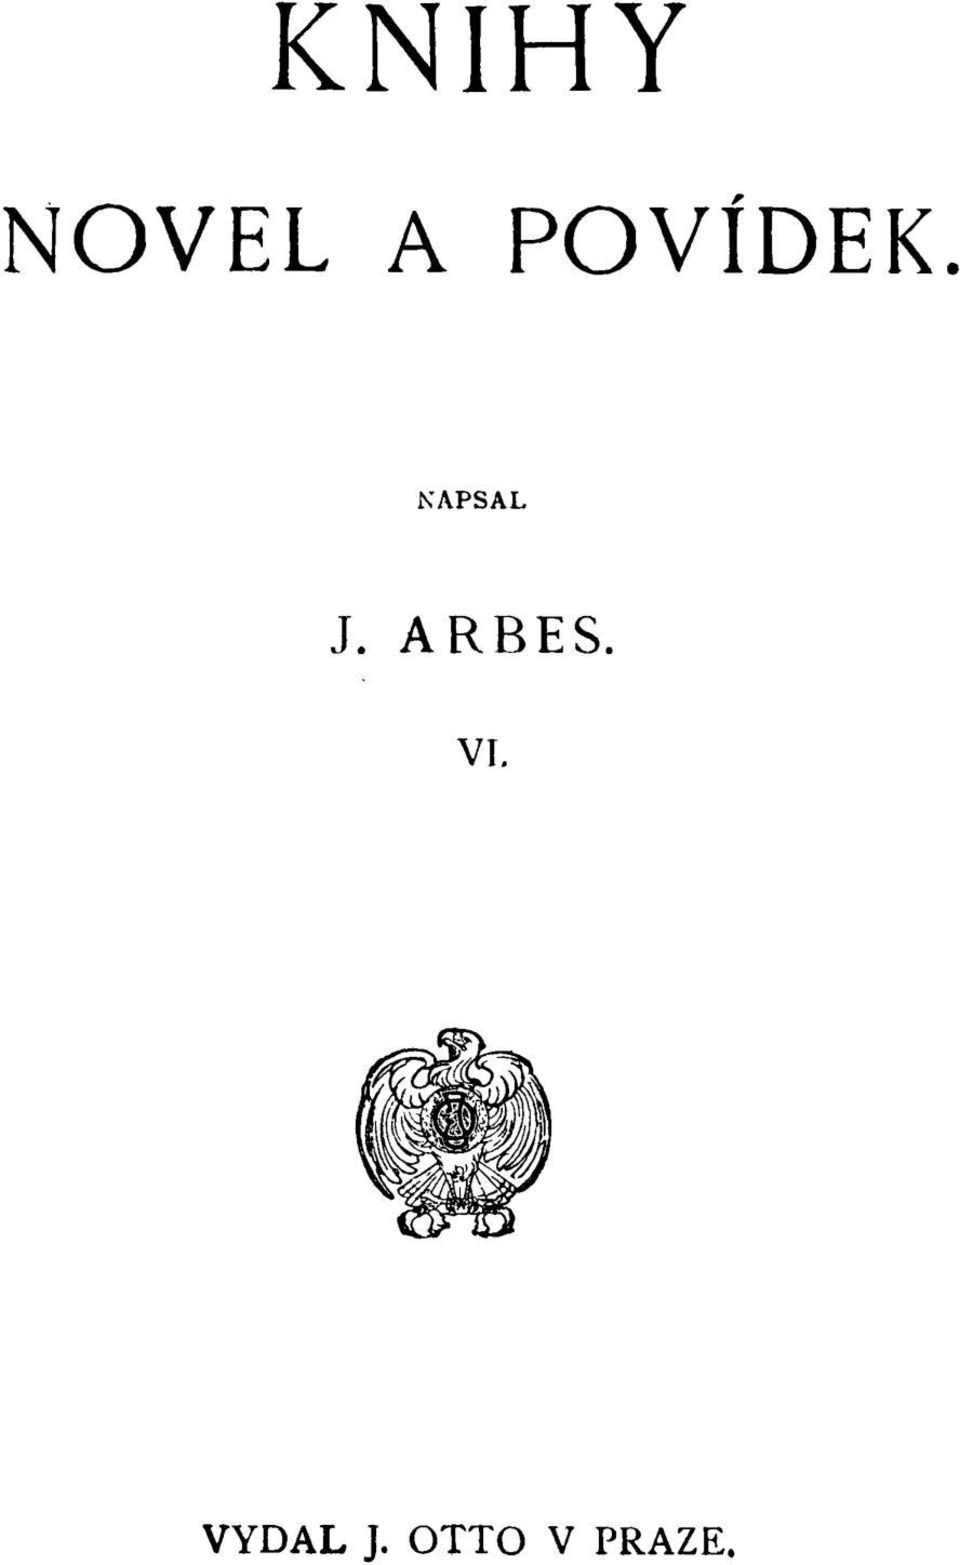 NAPSAL J. ARBES.